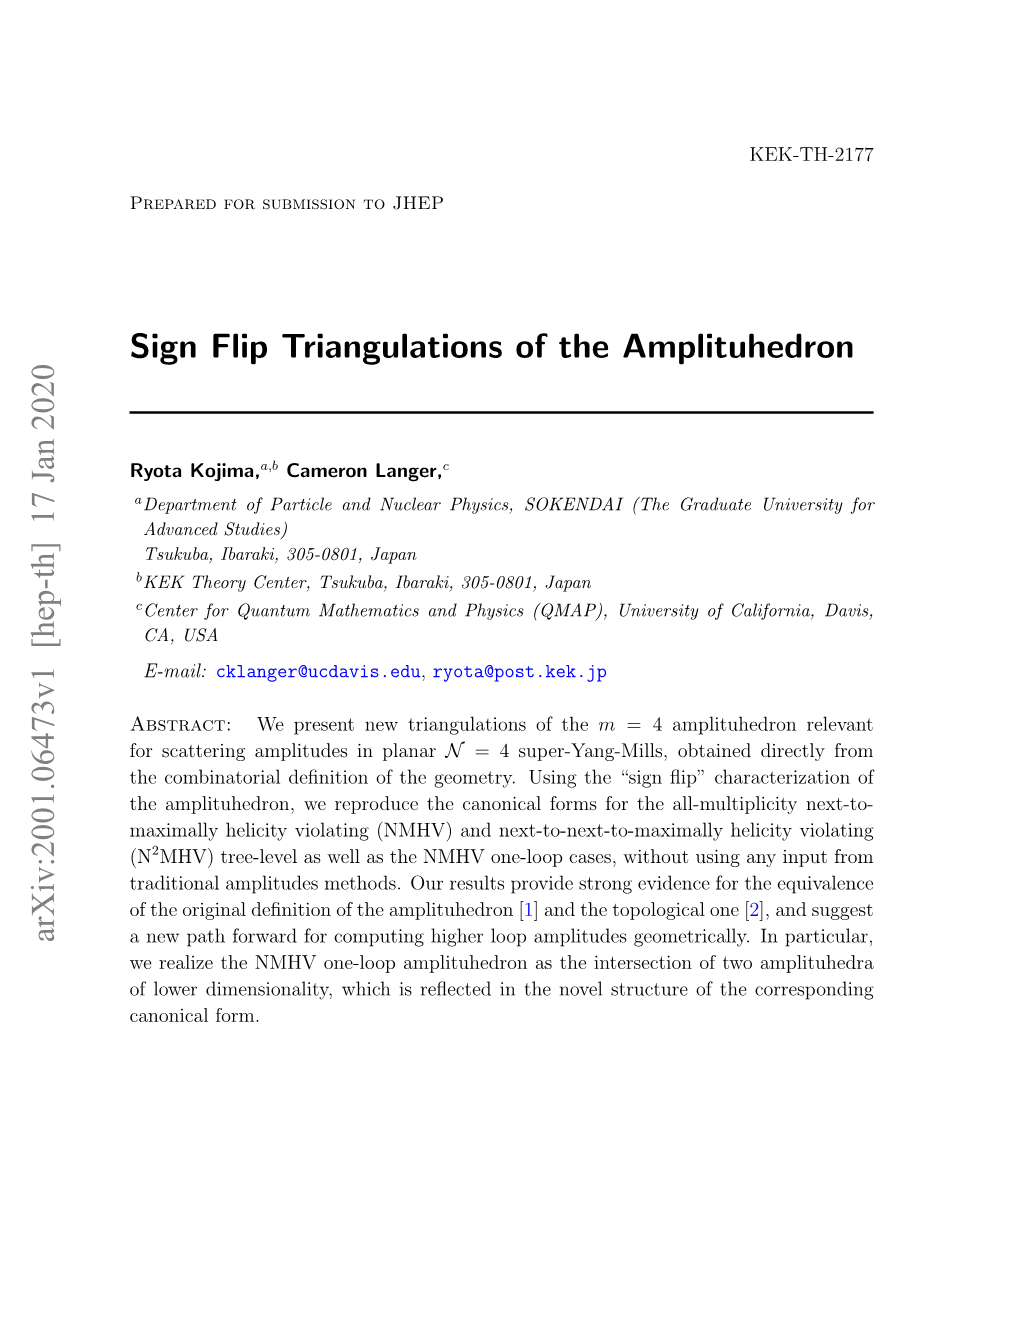 Sign Flip Triangulations of the Amplituhedron Arxiv:2001.06473V1